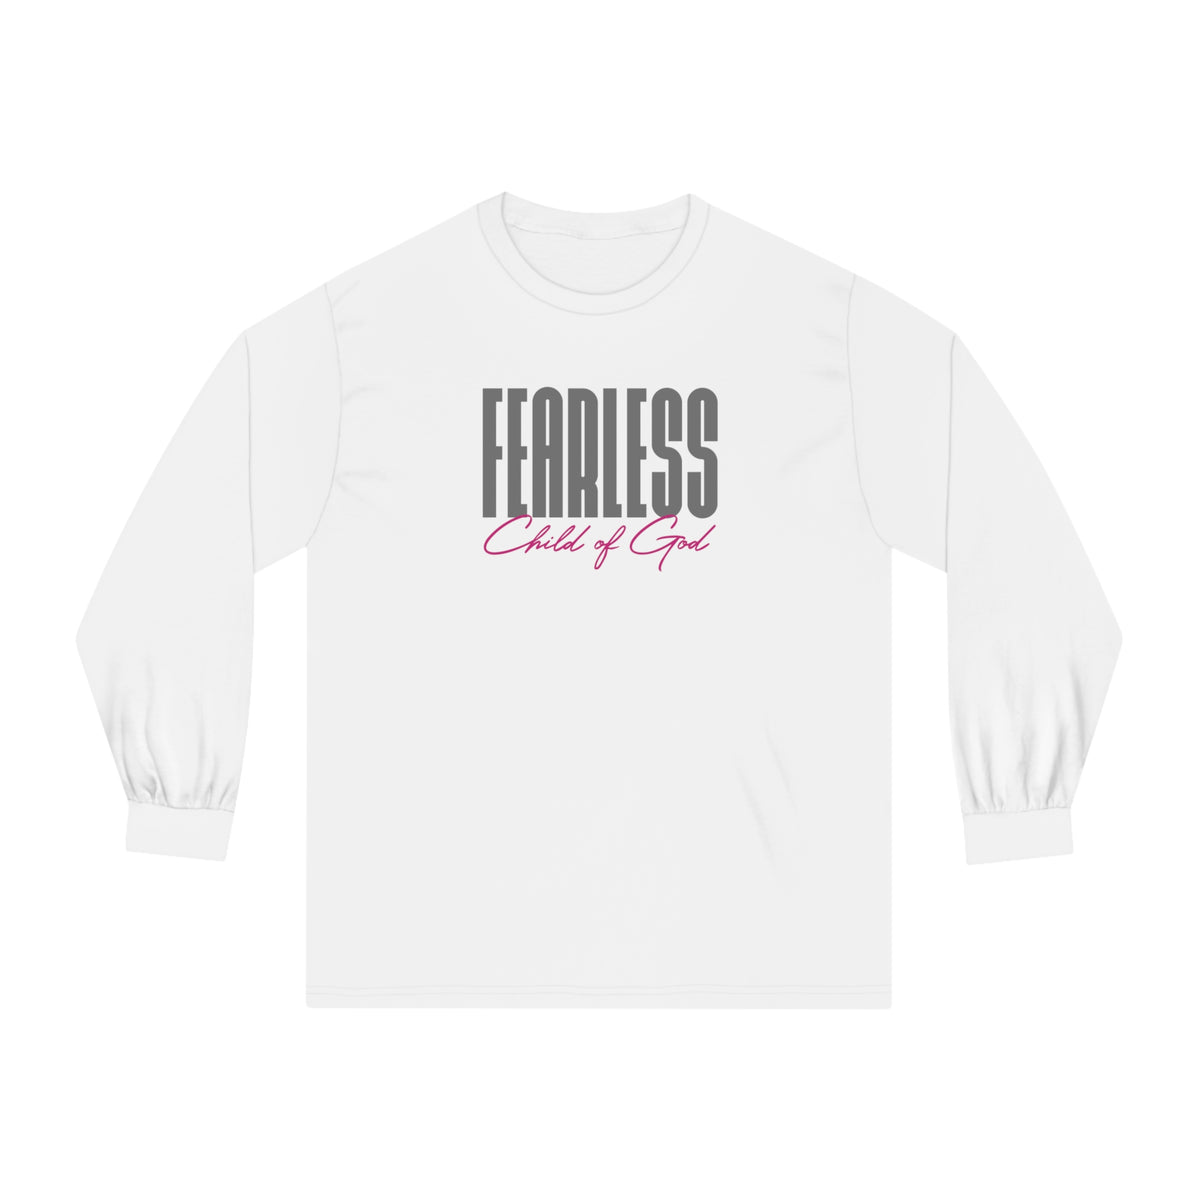 Fearless Child of God Unisex Long Sleeve T-Shirt